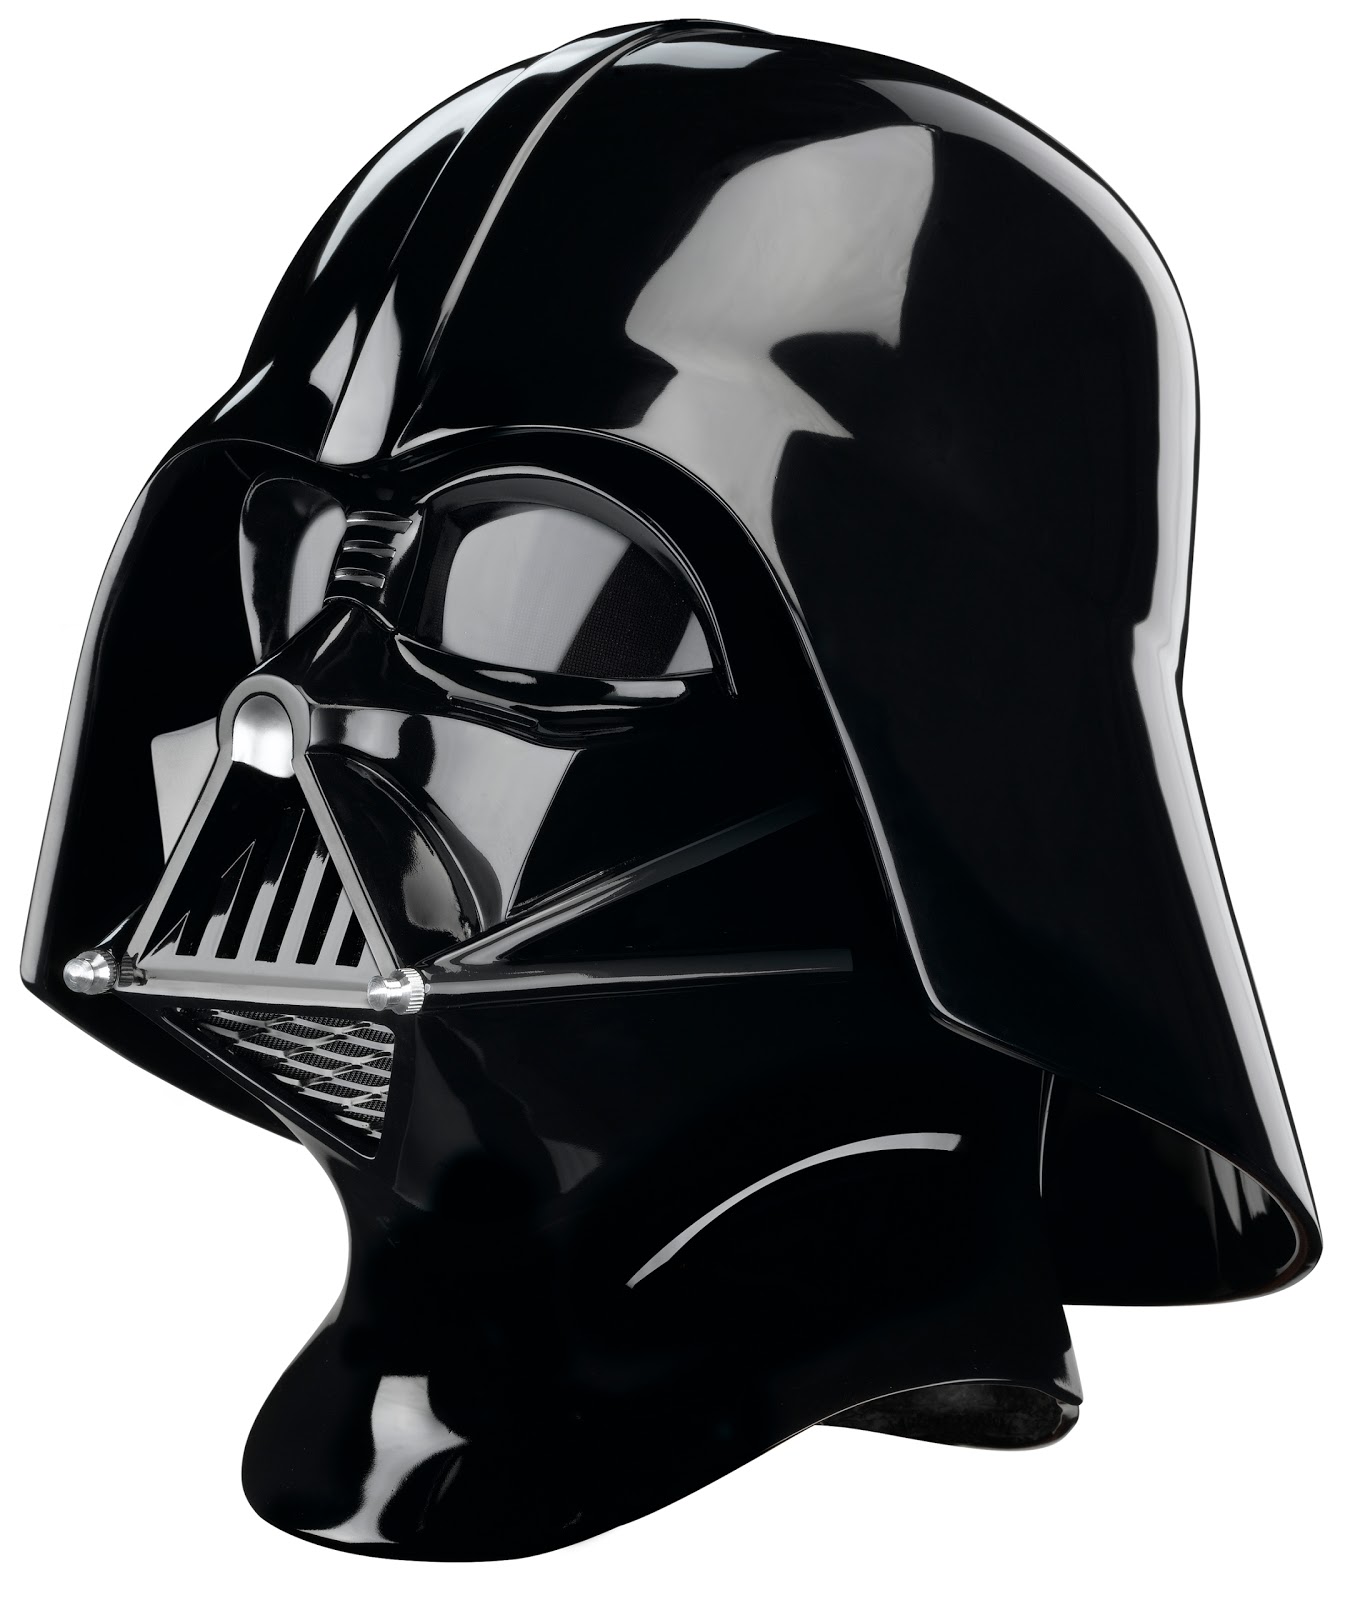 Darth Vader Helmet And Mask - modelings